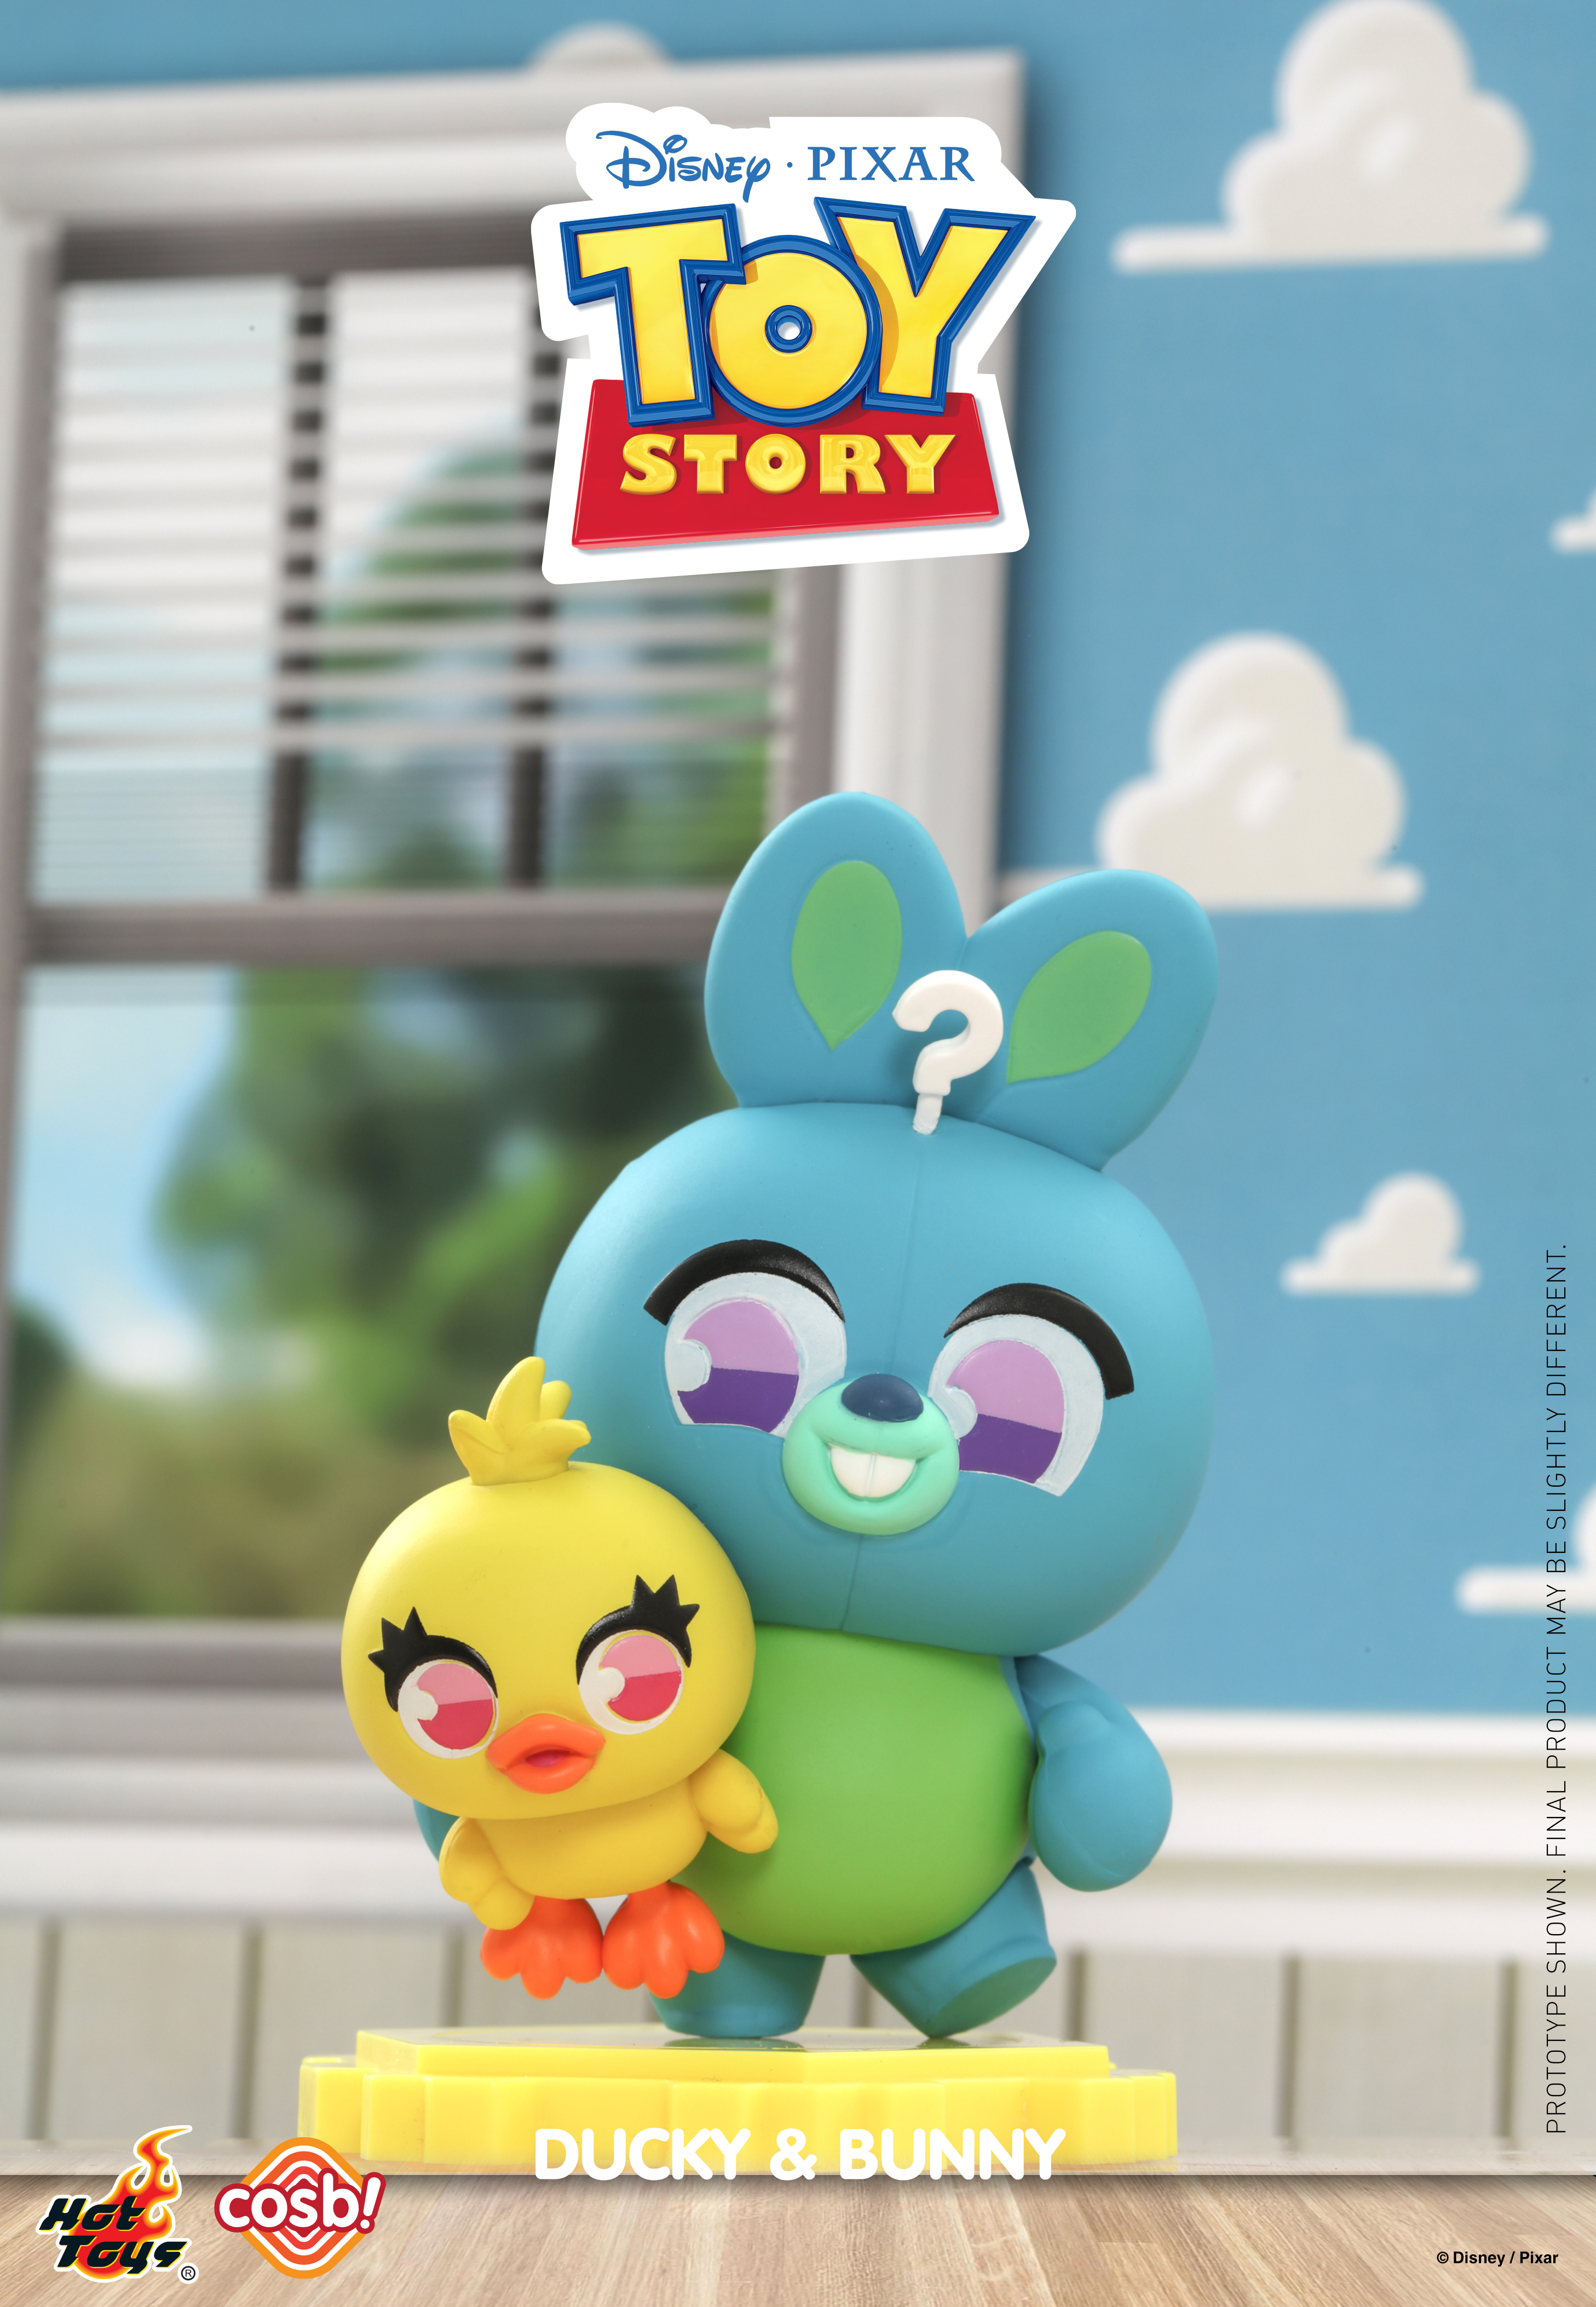 Hot Toys - Toy Story Cosbi_Ducky & Bunny_PR1